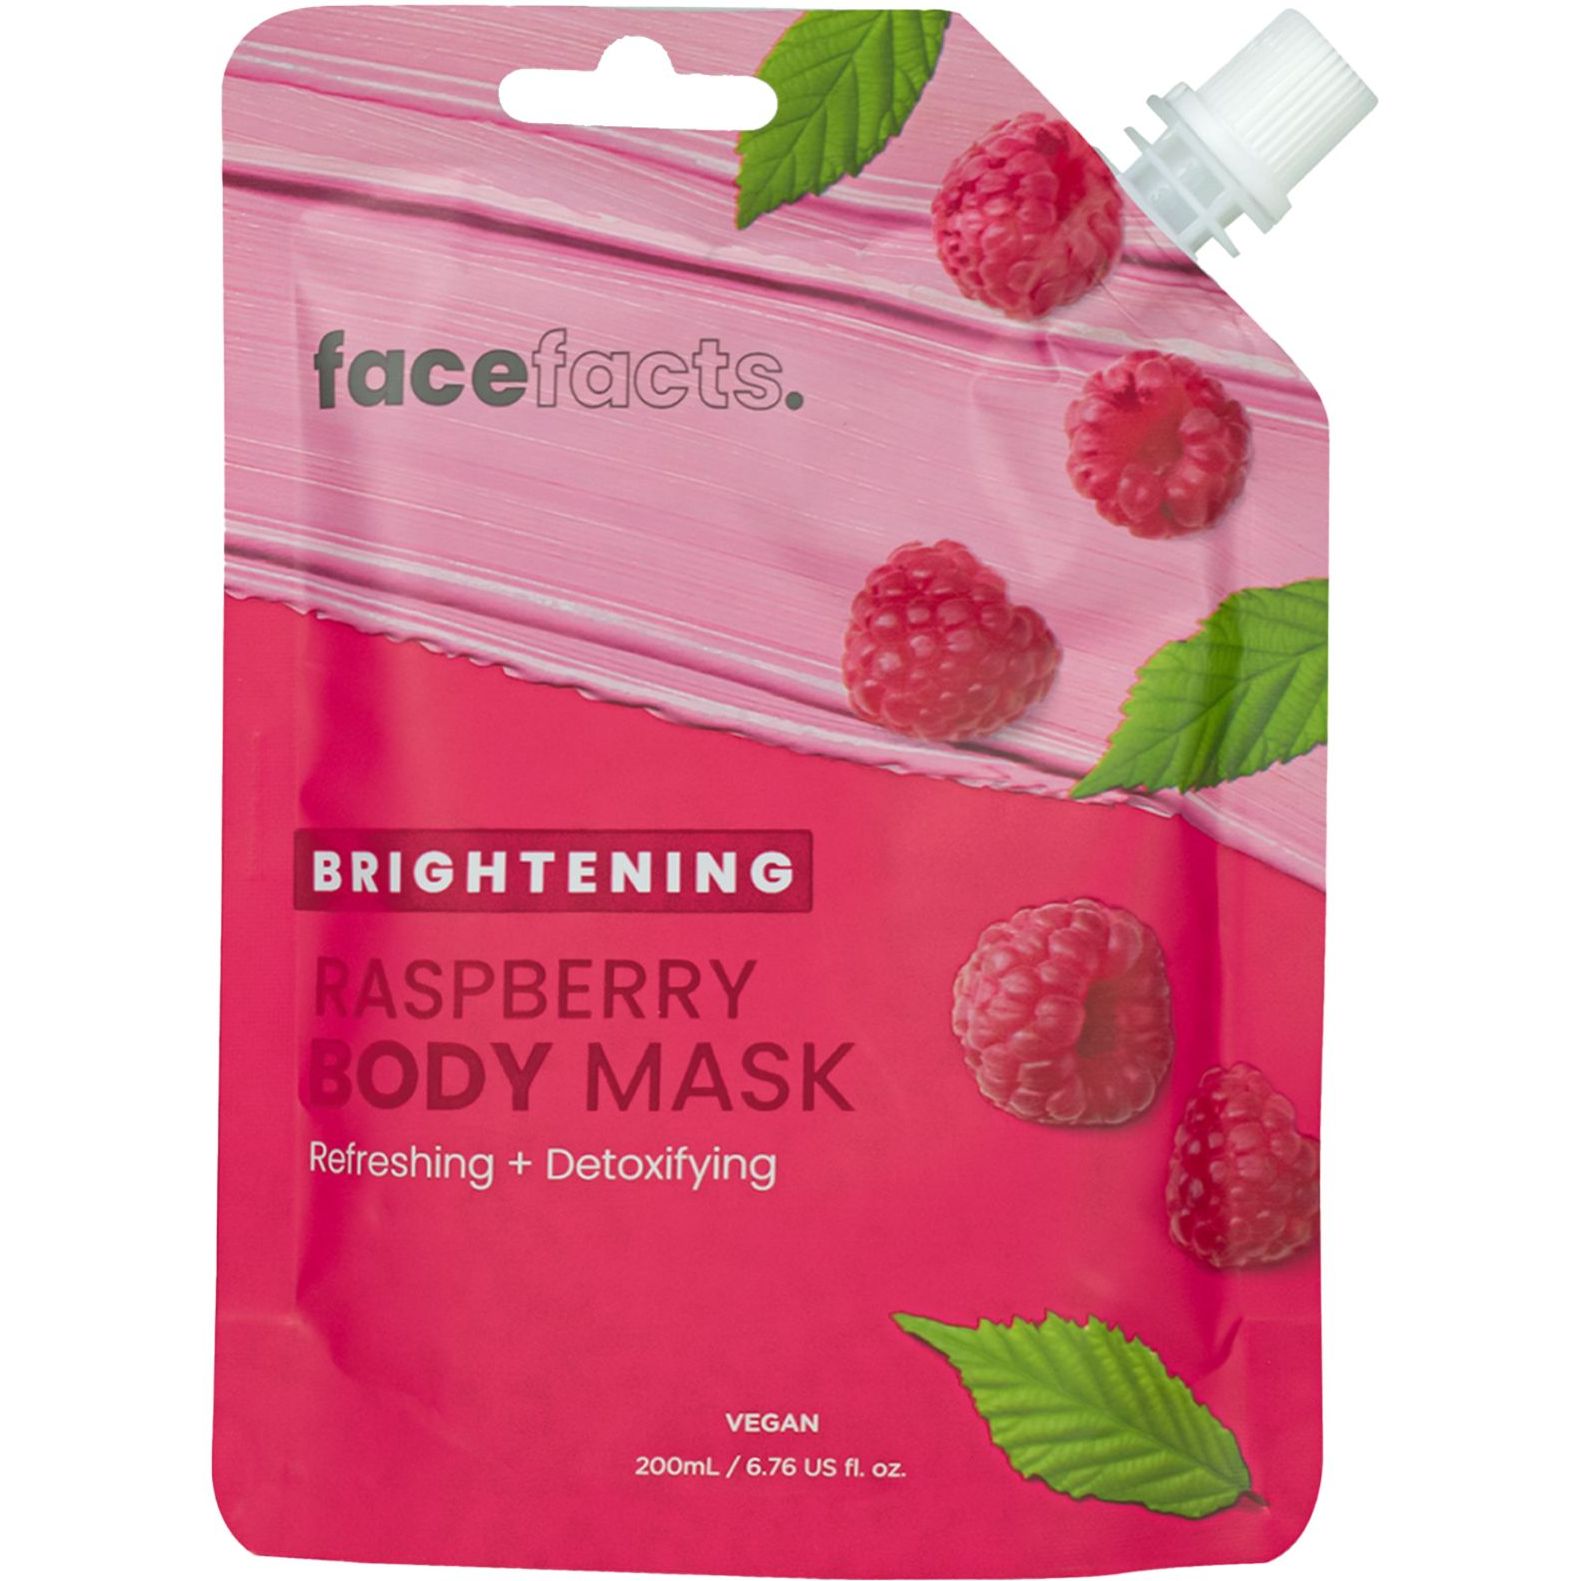 Осветляющая грязевая маска для тела Face Facts Brightening Raspberry Body Mask 200 мл - фото 1